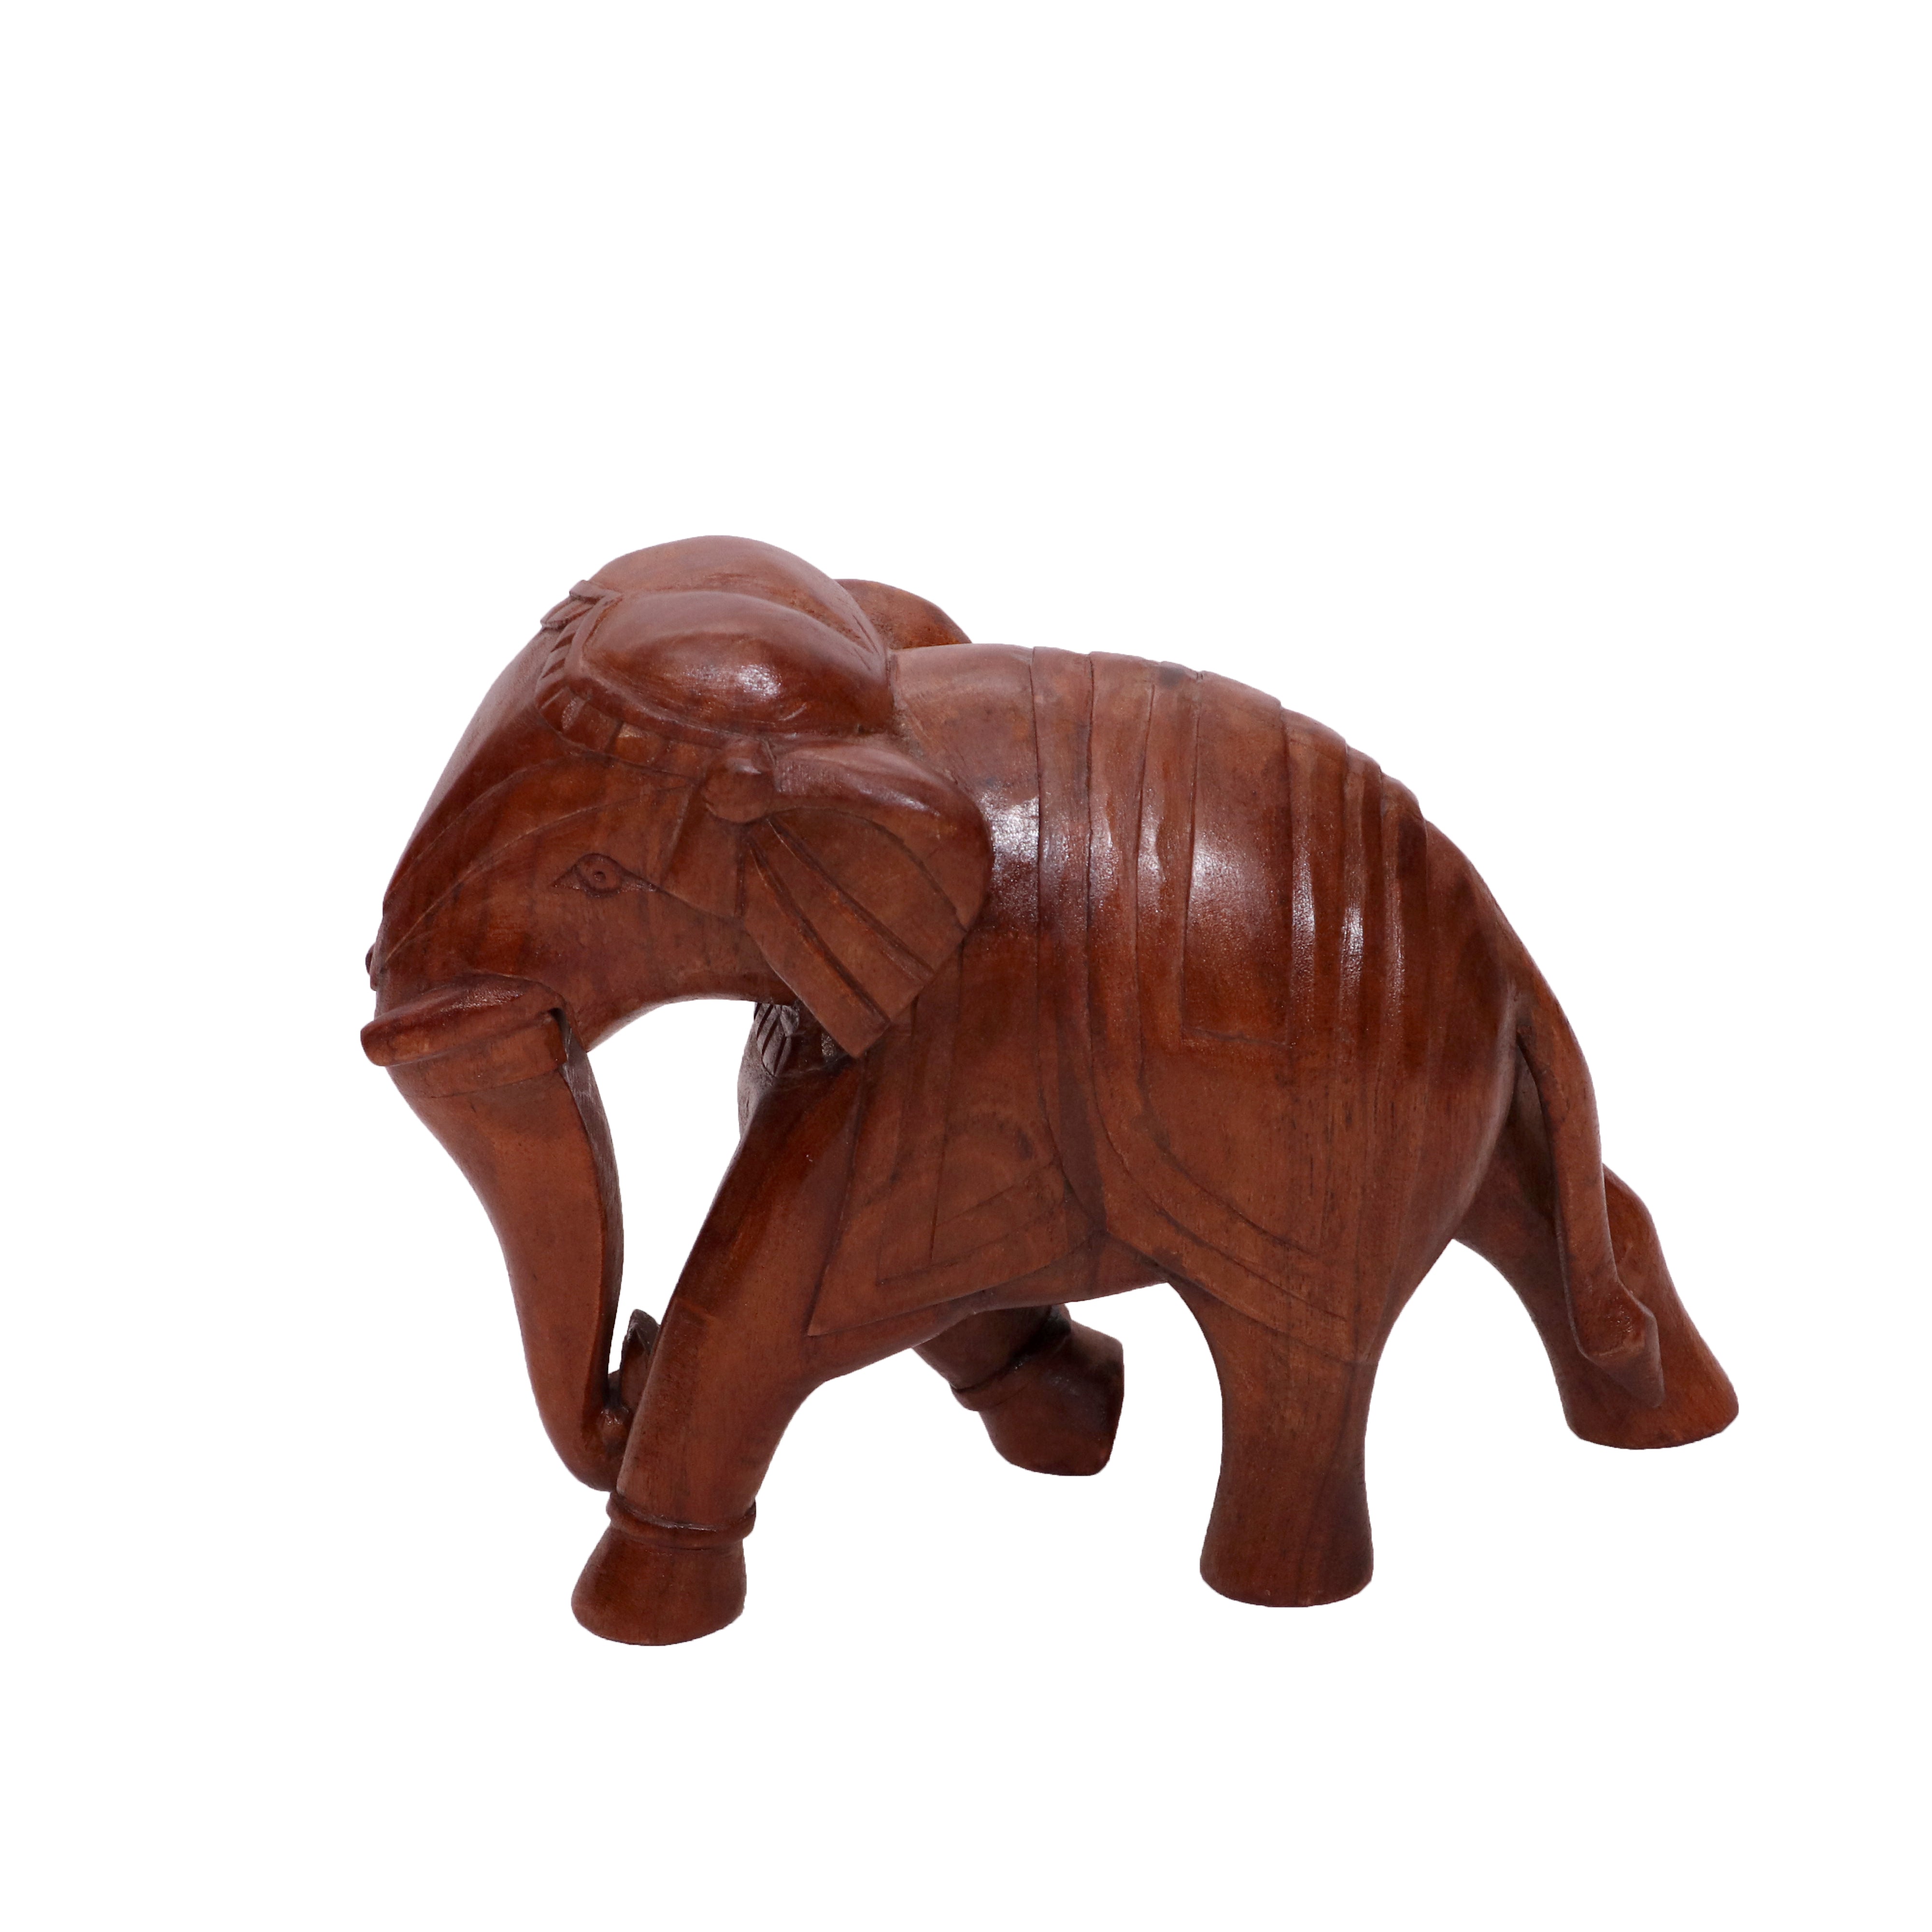 Walking Wooden Carved Elephant Animal Figurine